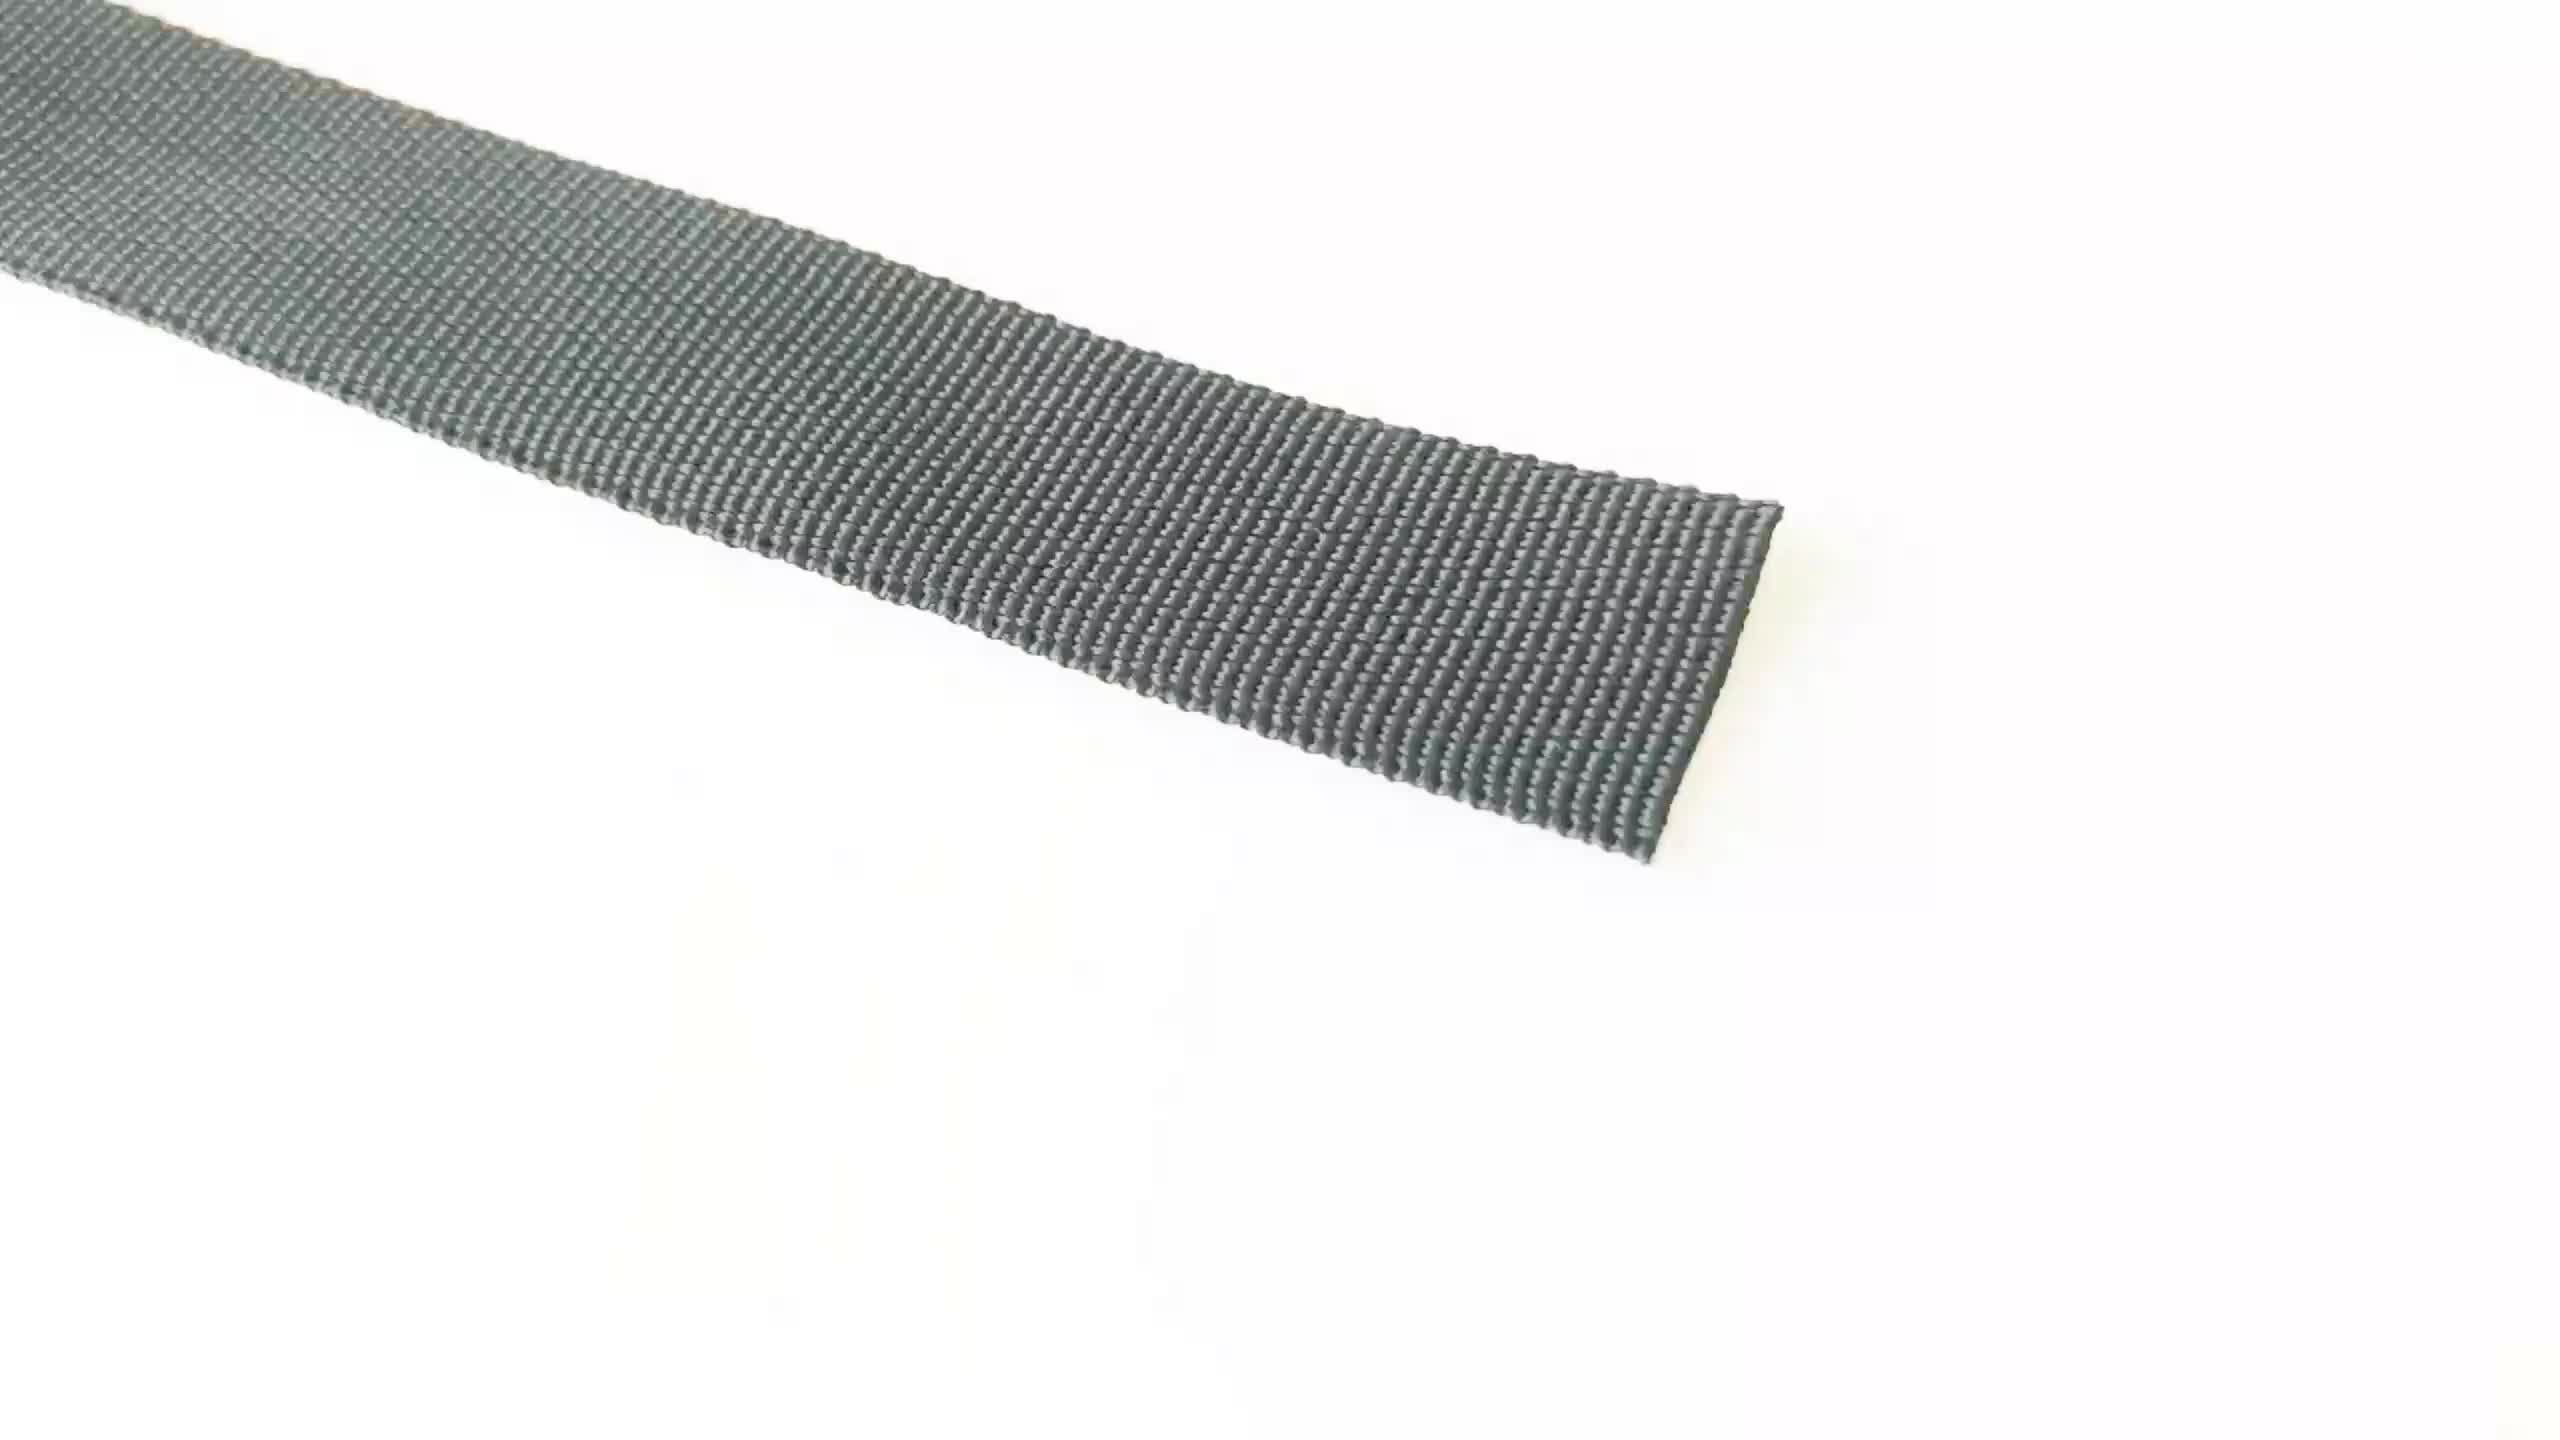 LIUSM 10 Yard Nylon Webbing Strap,Black Durable Flat Straps for